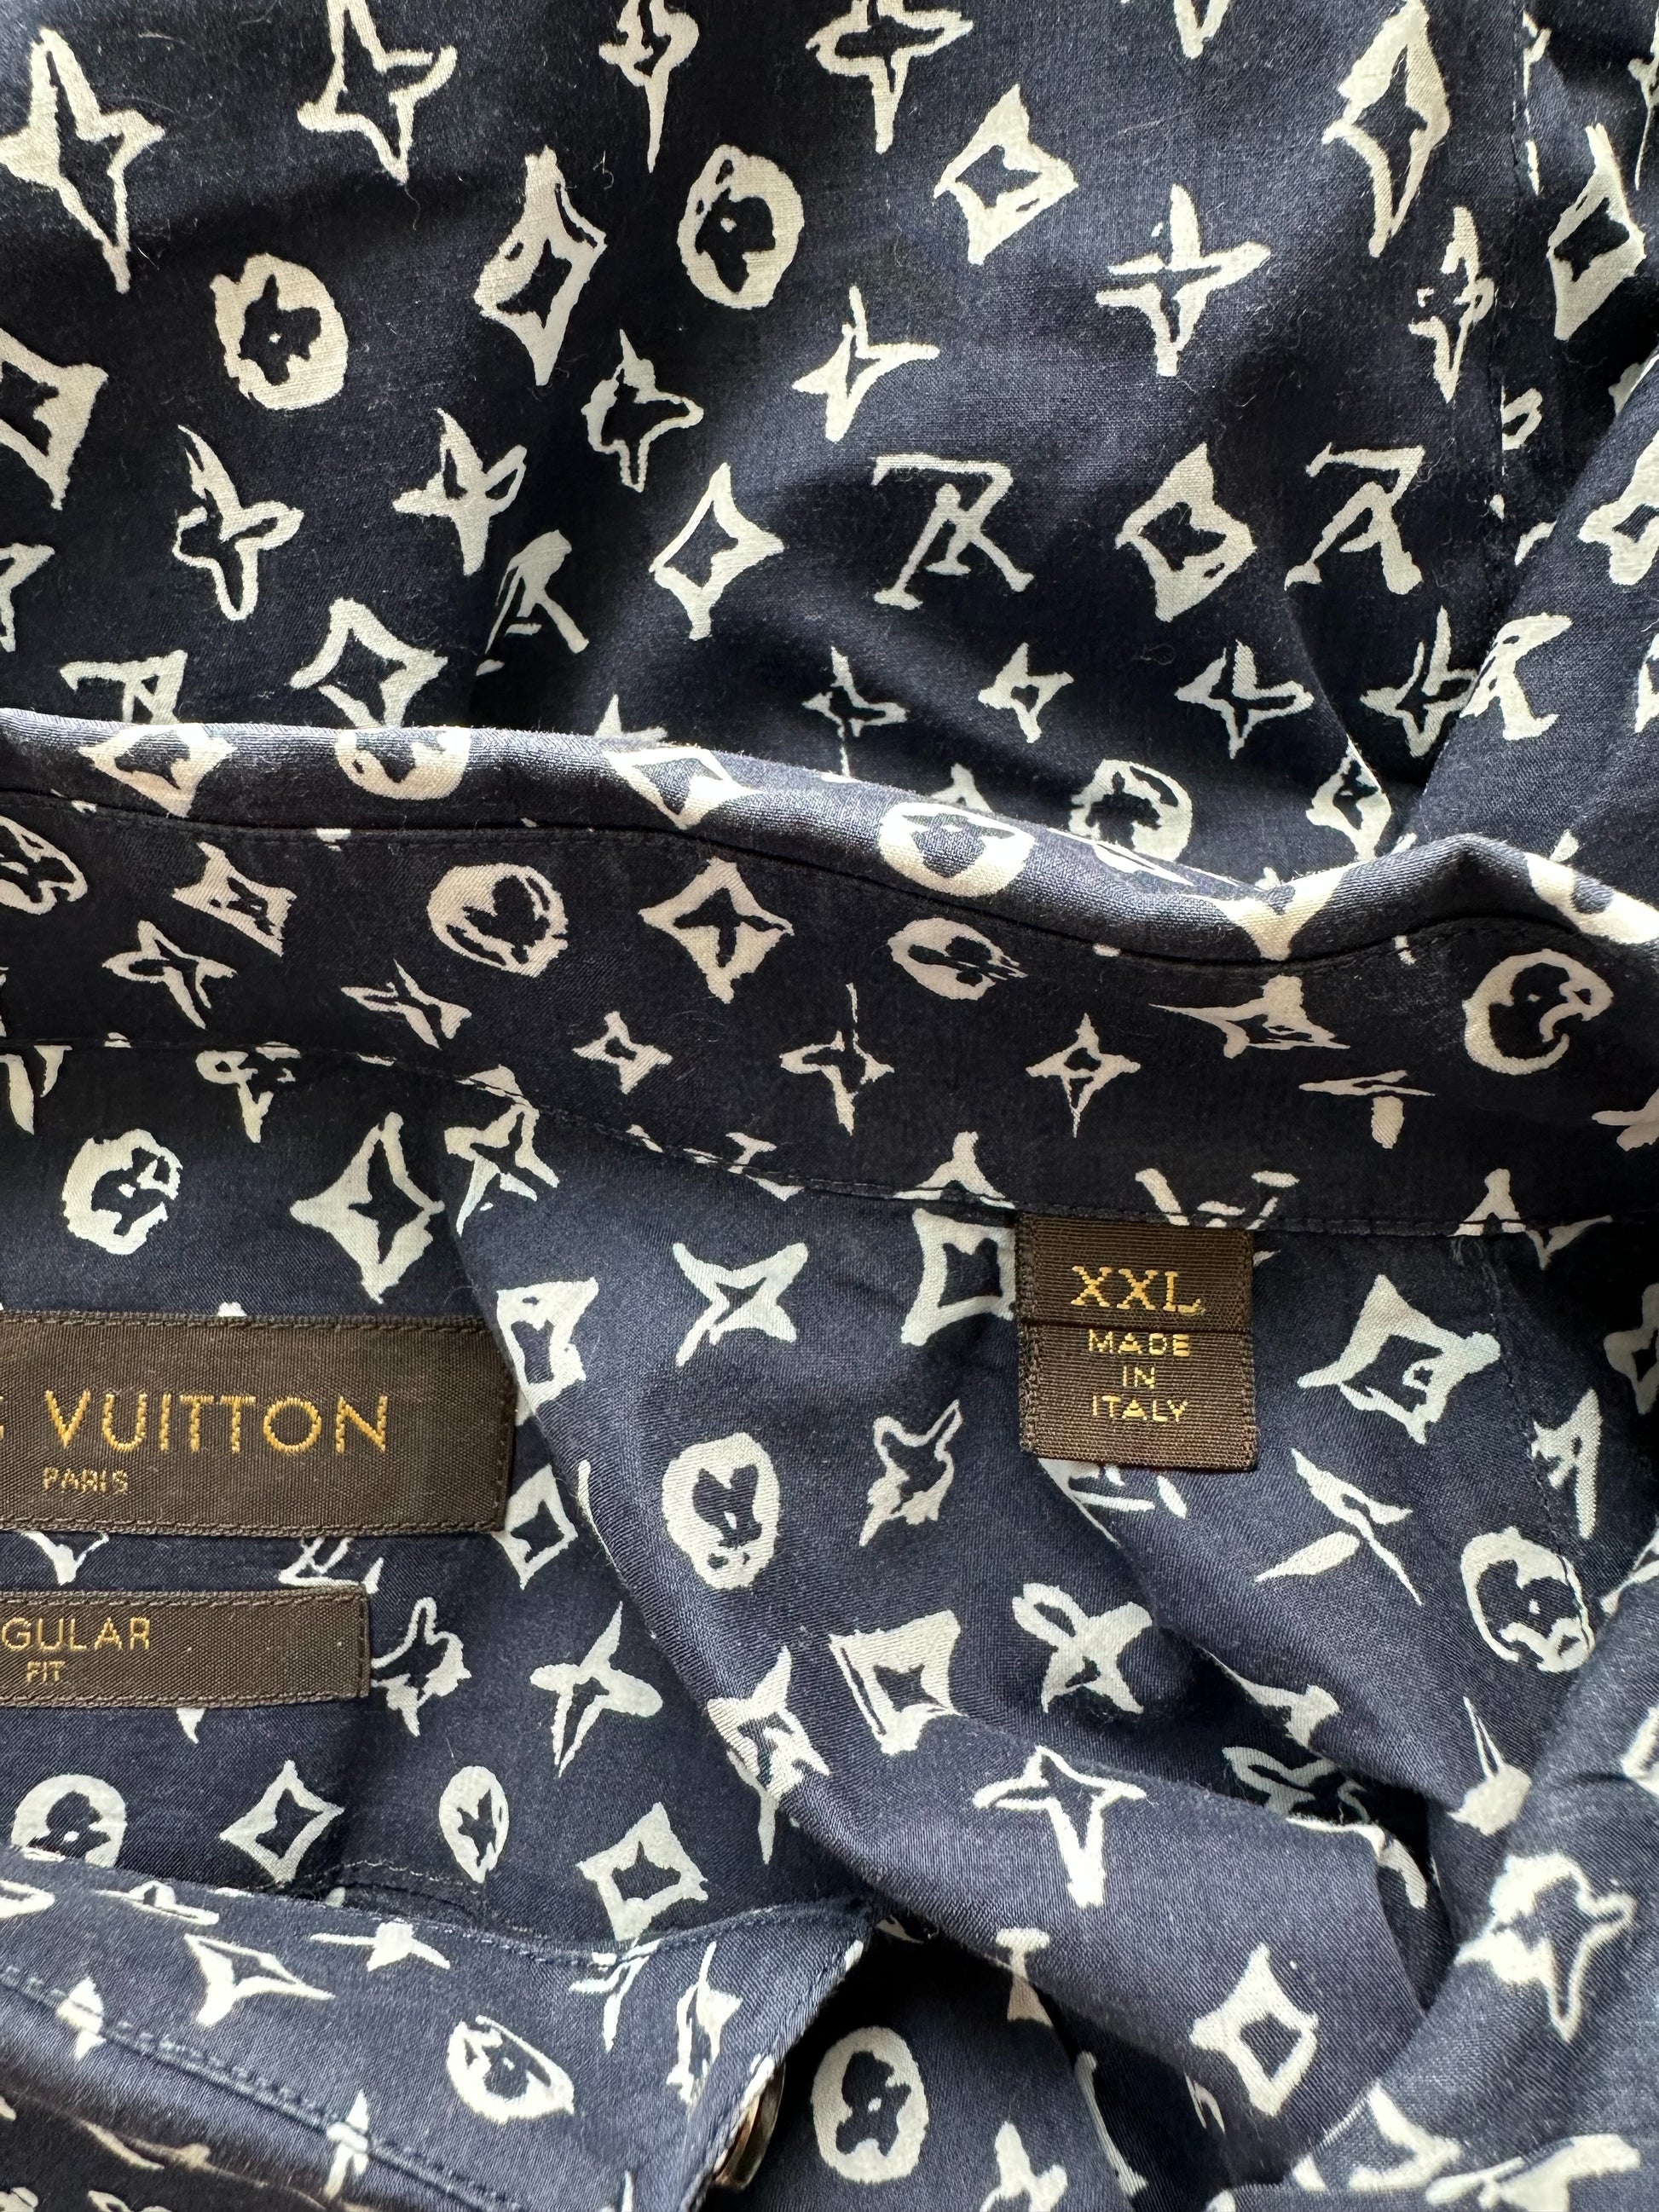 Louis Vuitton Navy & White Monogram Button Up Shirt – Savonches